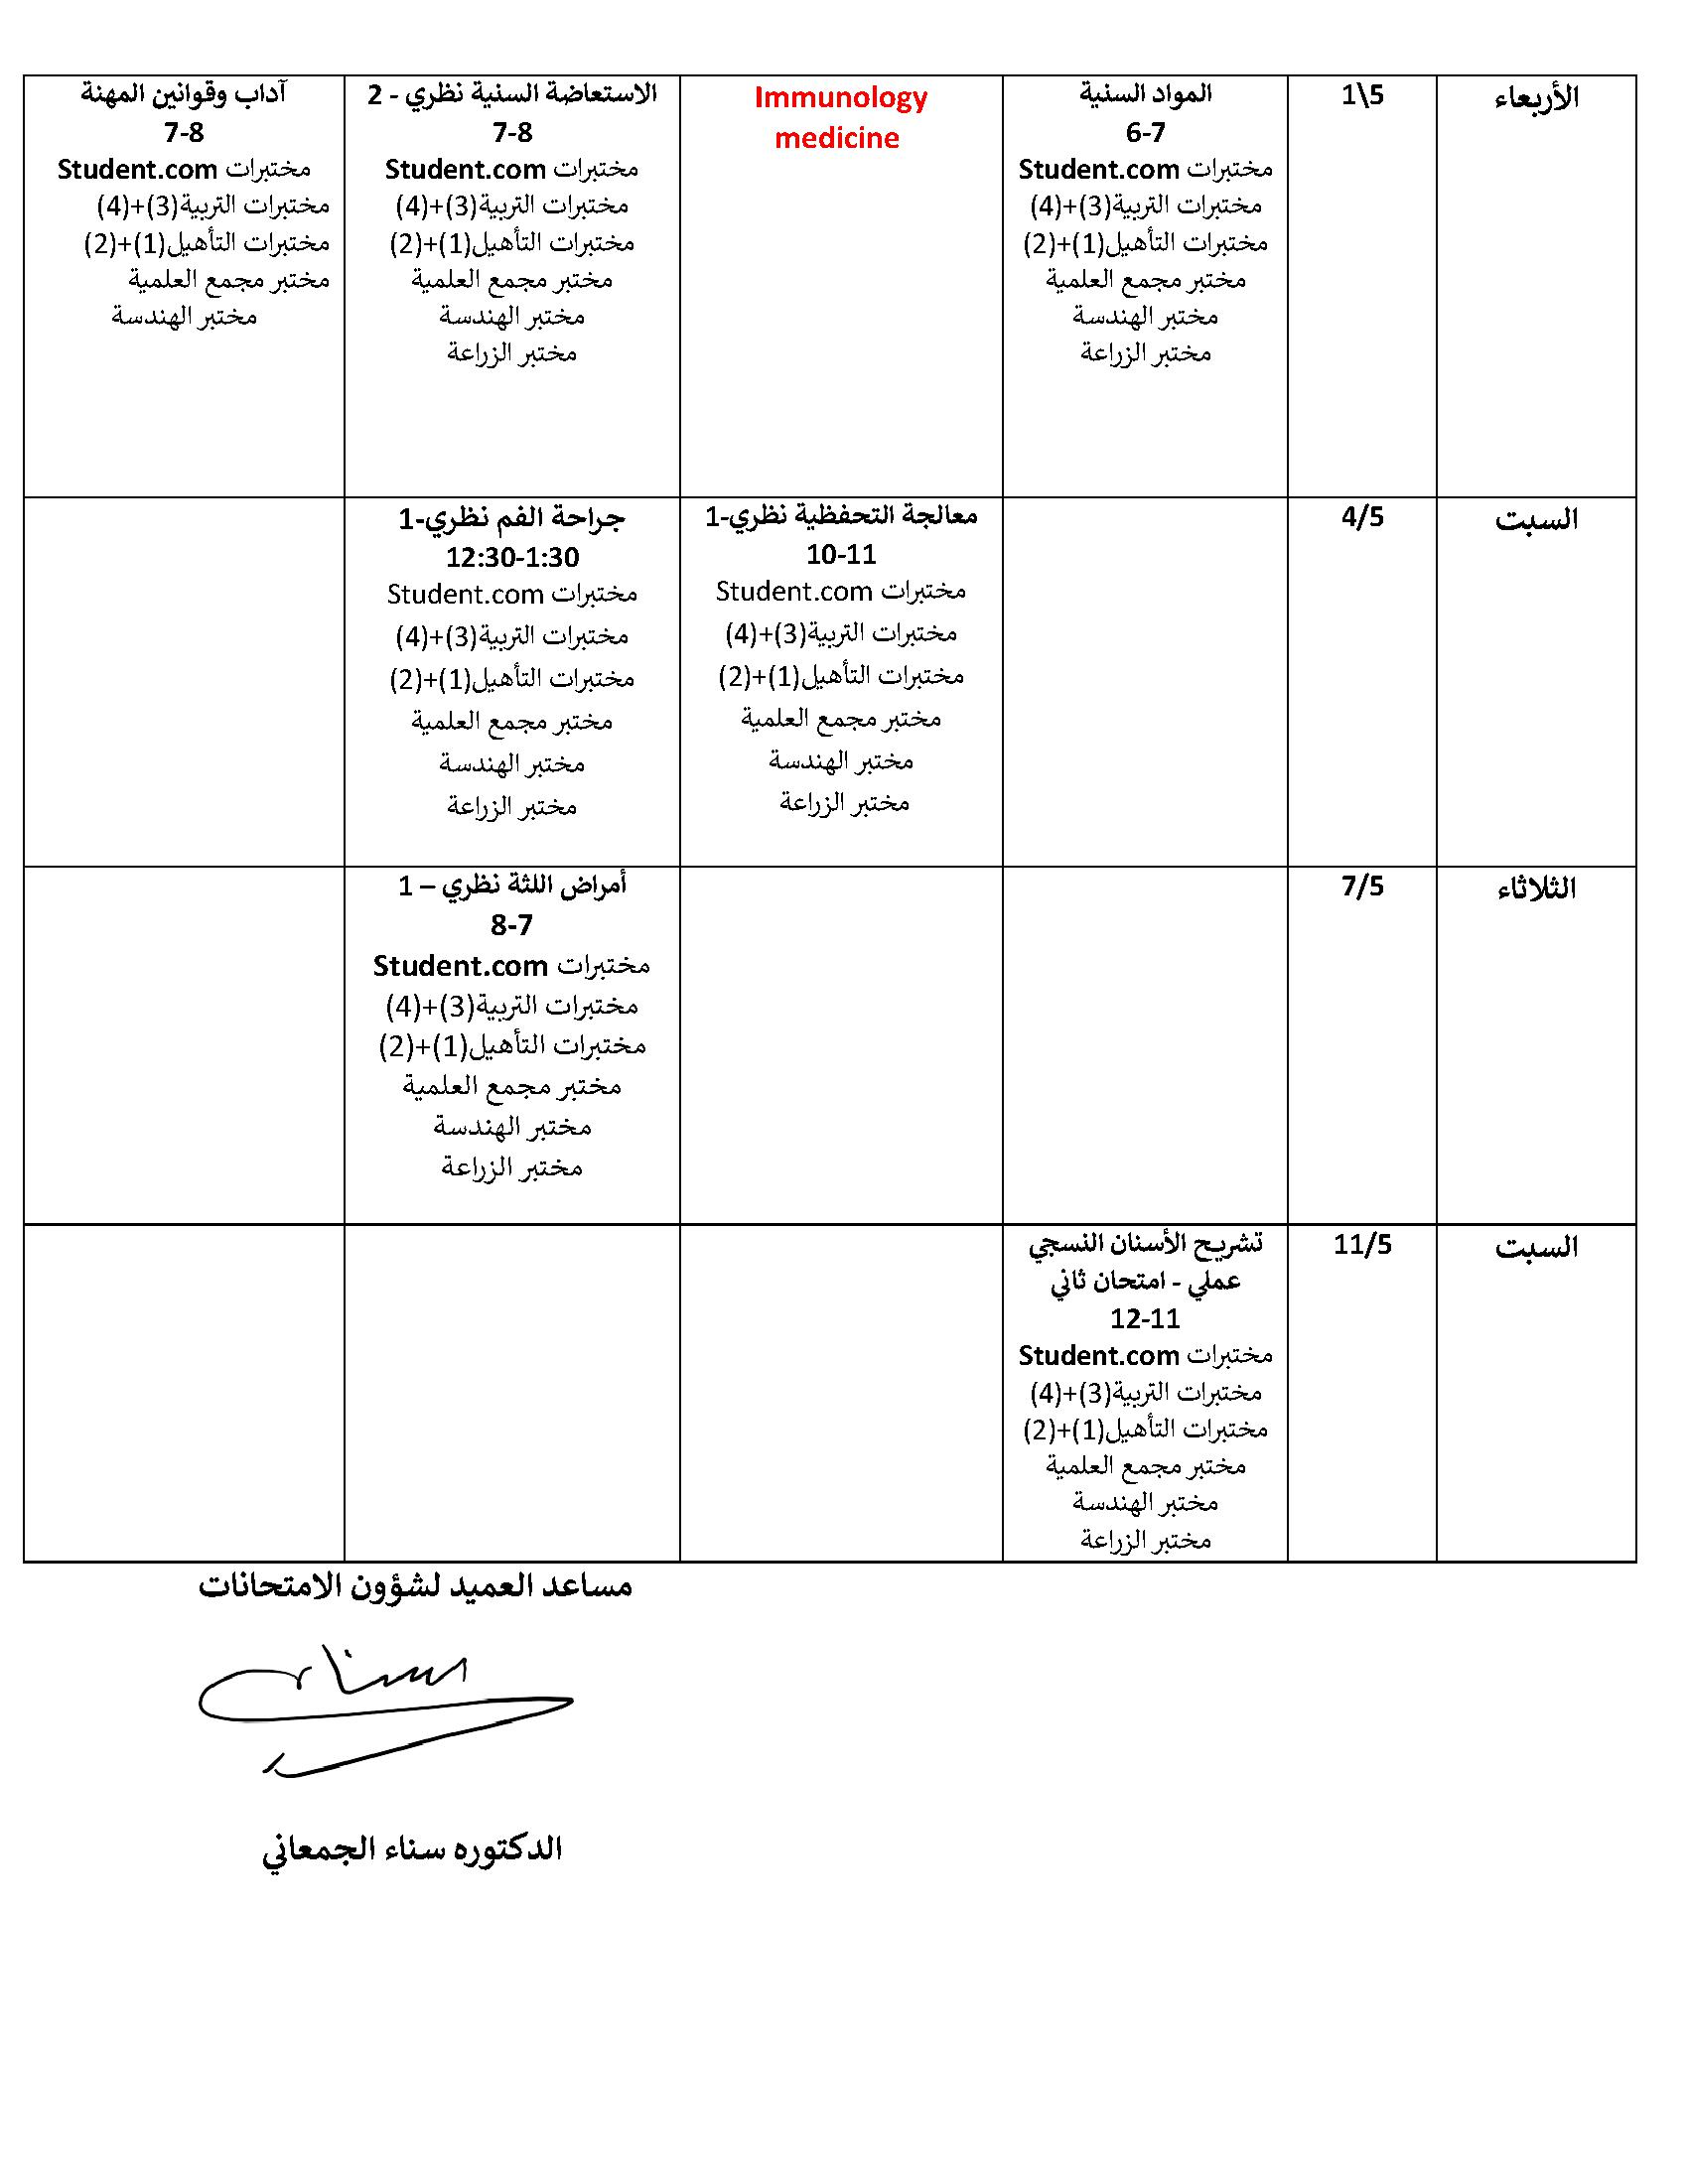 Mid term exam schedule latest update _3.jpg